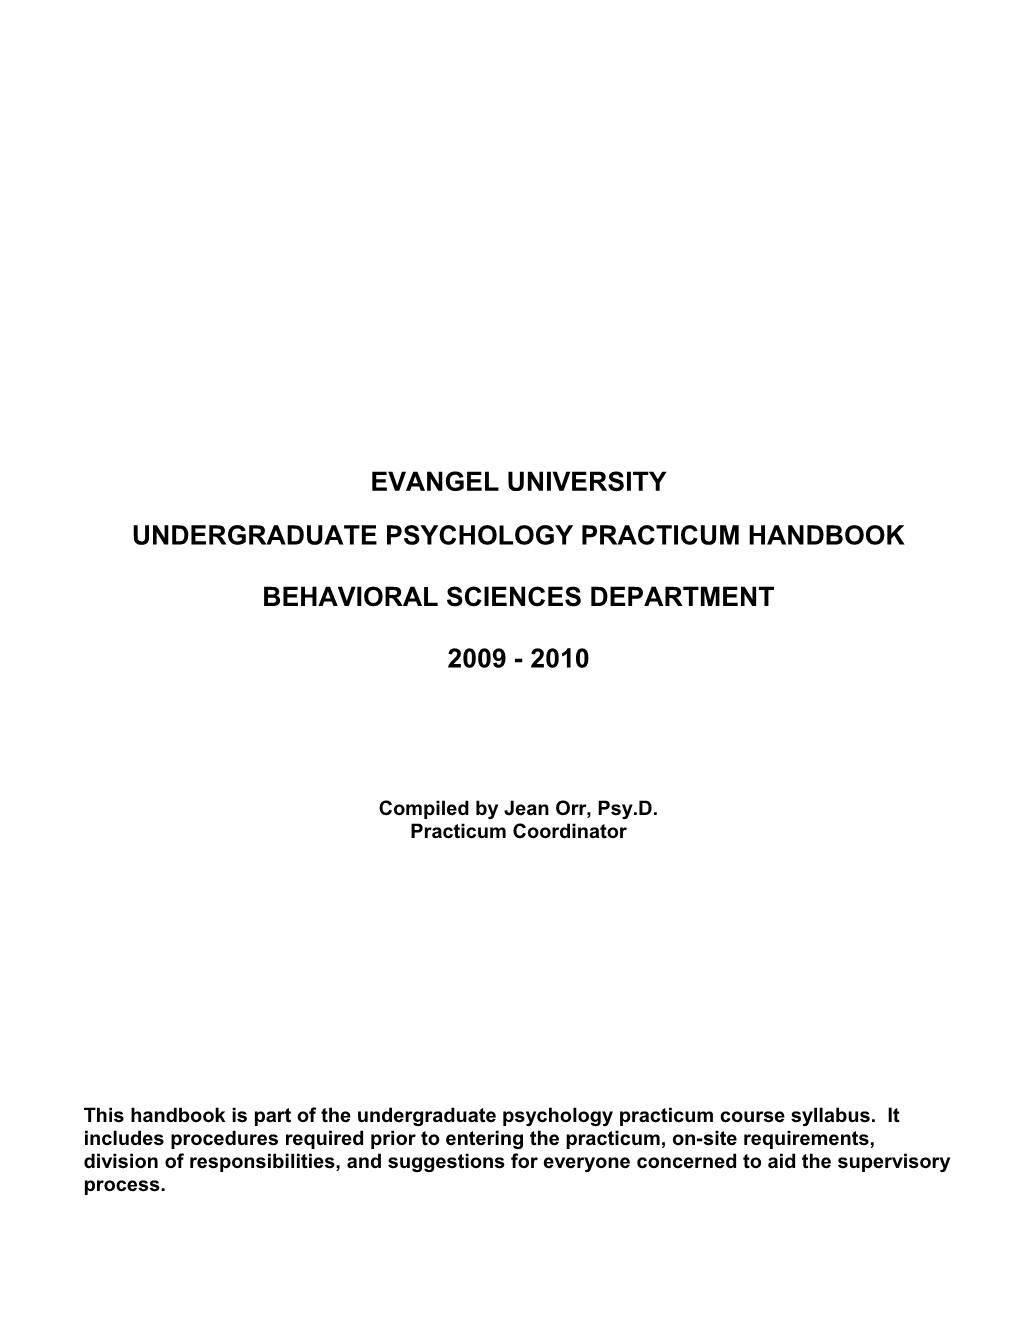 Graduate Practicum and Internship Handbook